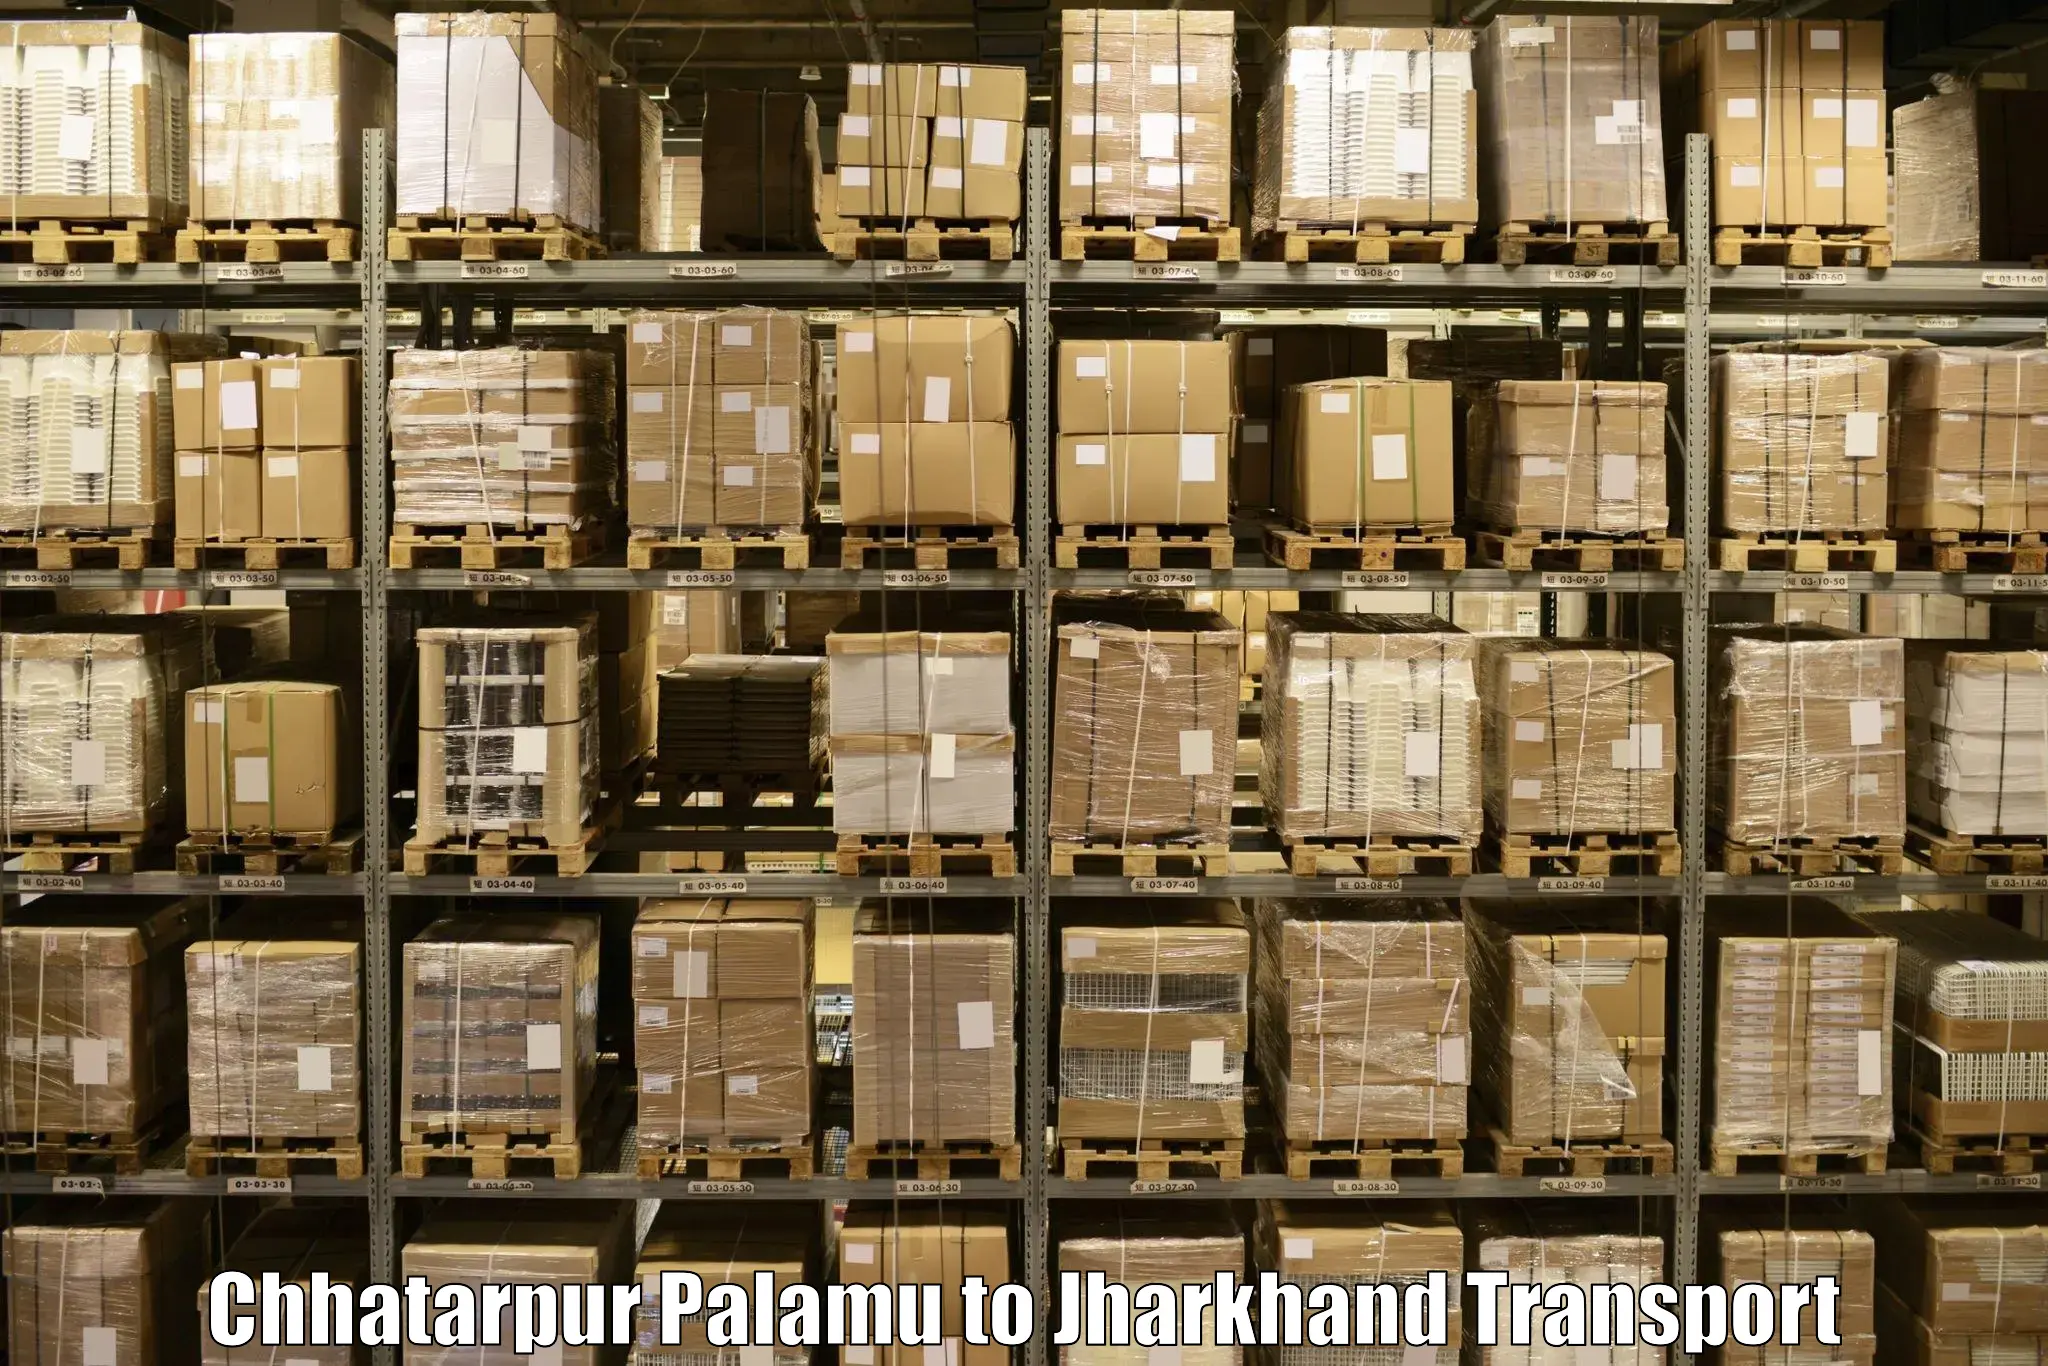 Delivery service Chhatarpur Palamu to Chhatarpur Palamu